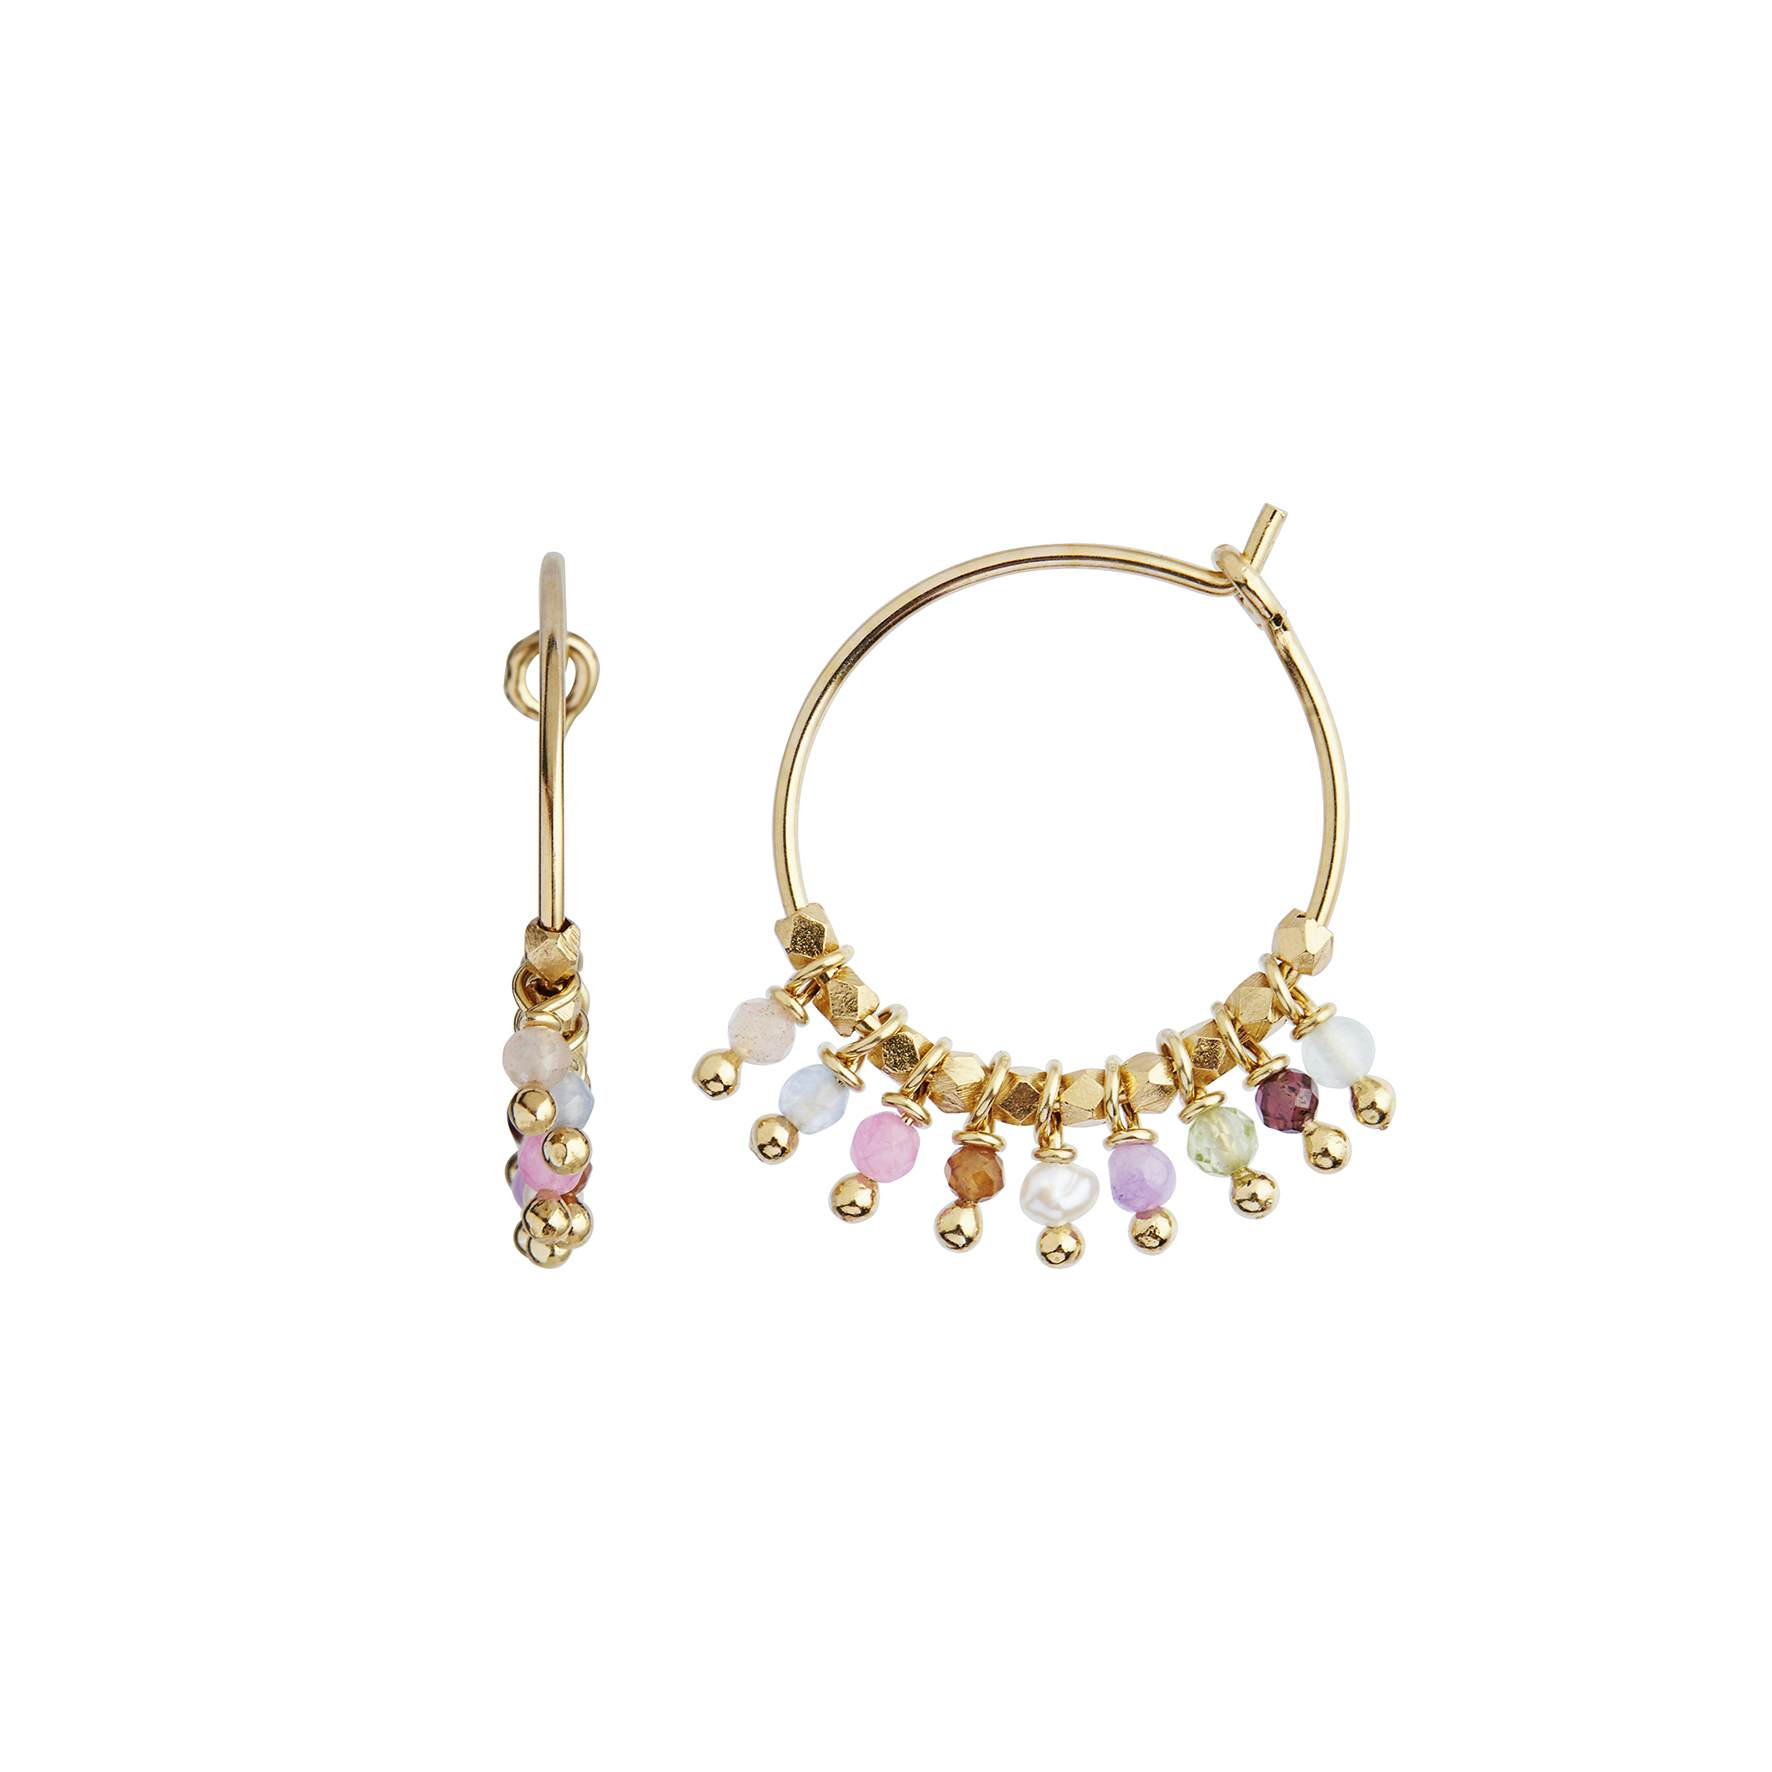 Petit Rainbow Hoop With Stones - Pastel Mix von STINE A Jewelry in Vergoldet-Silber Sterling 925